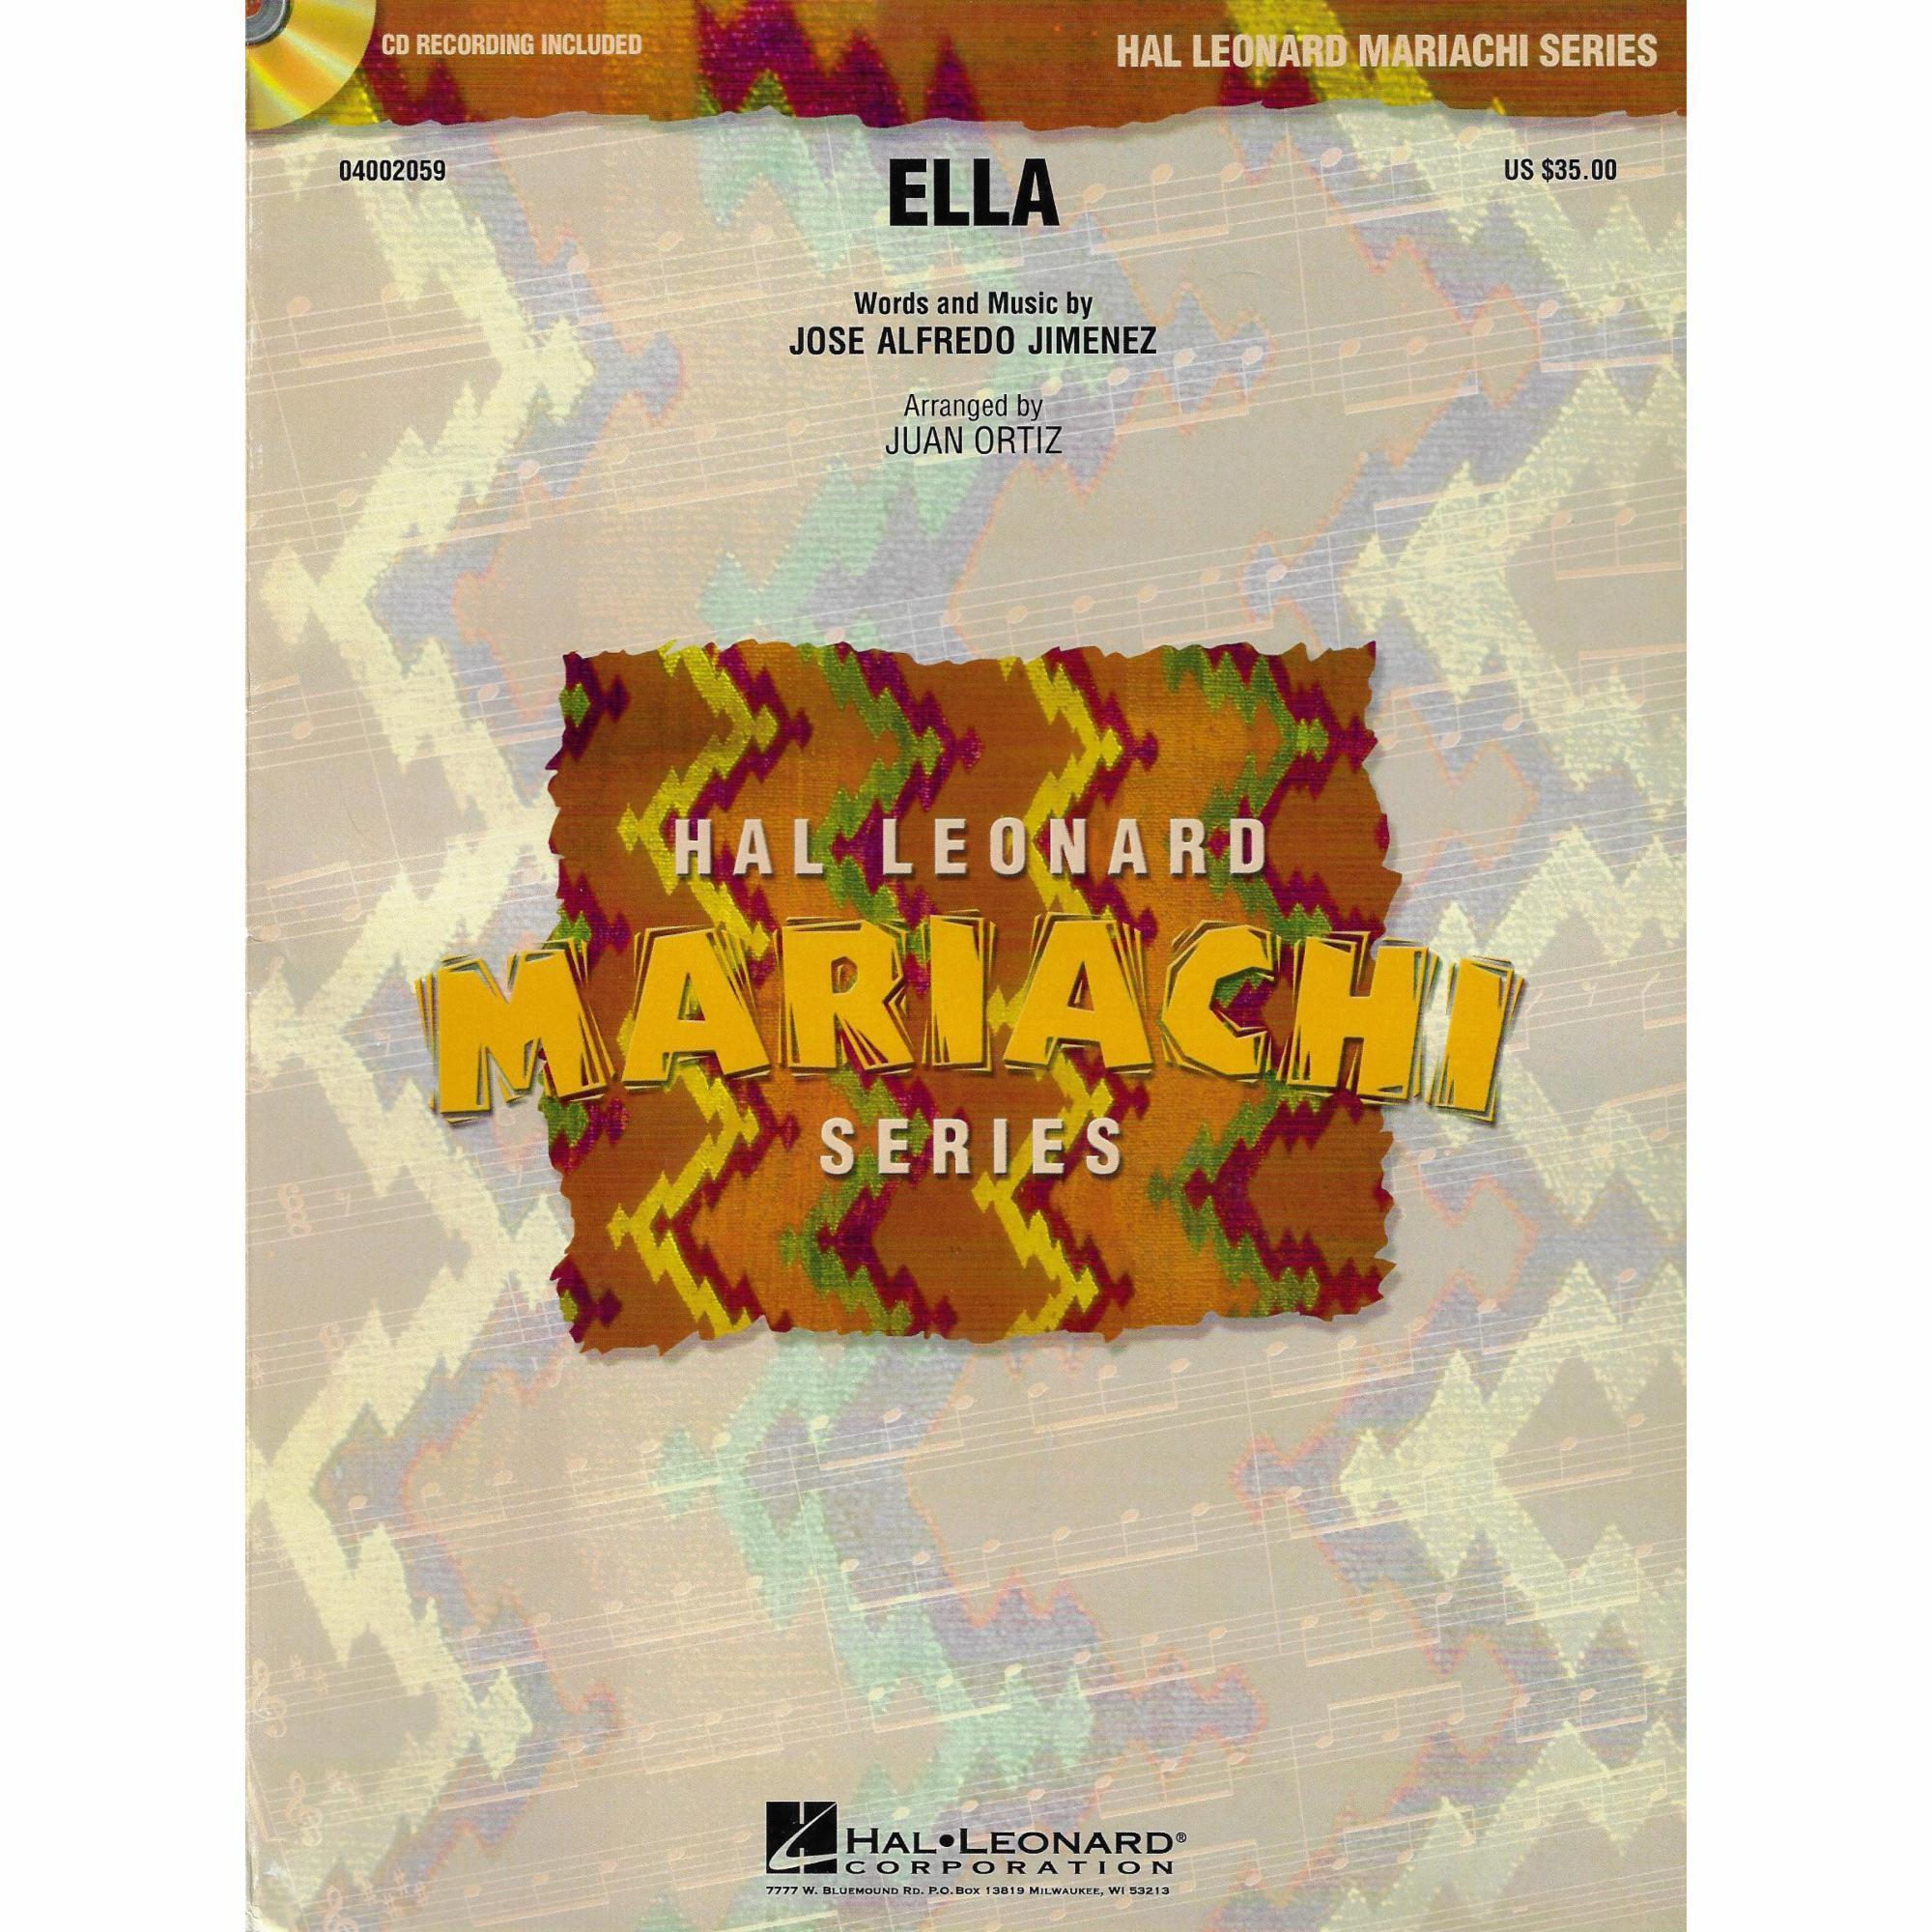 Ella for Mariachi Band